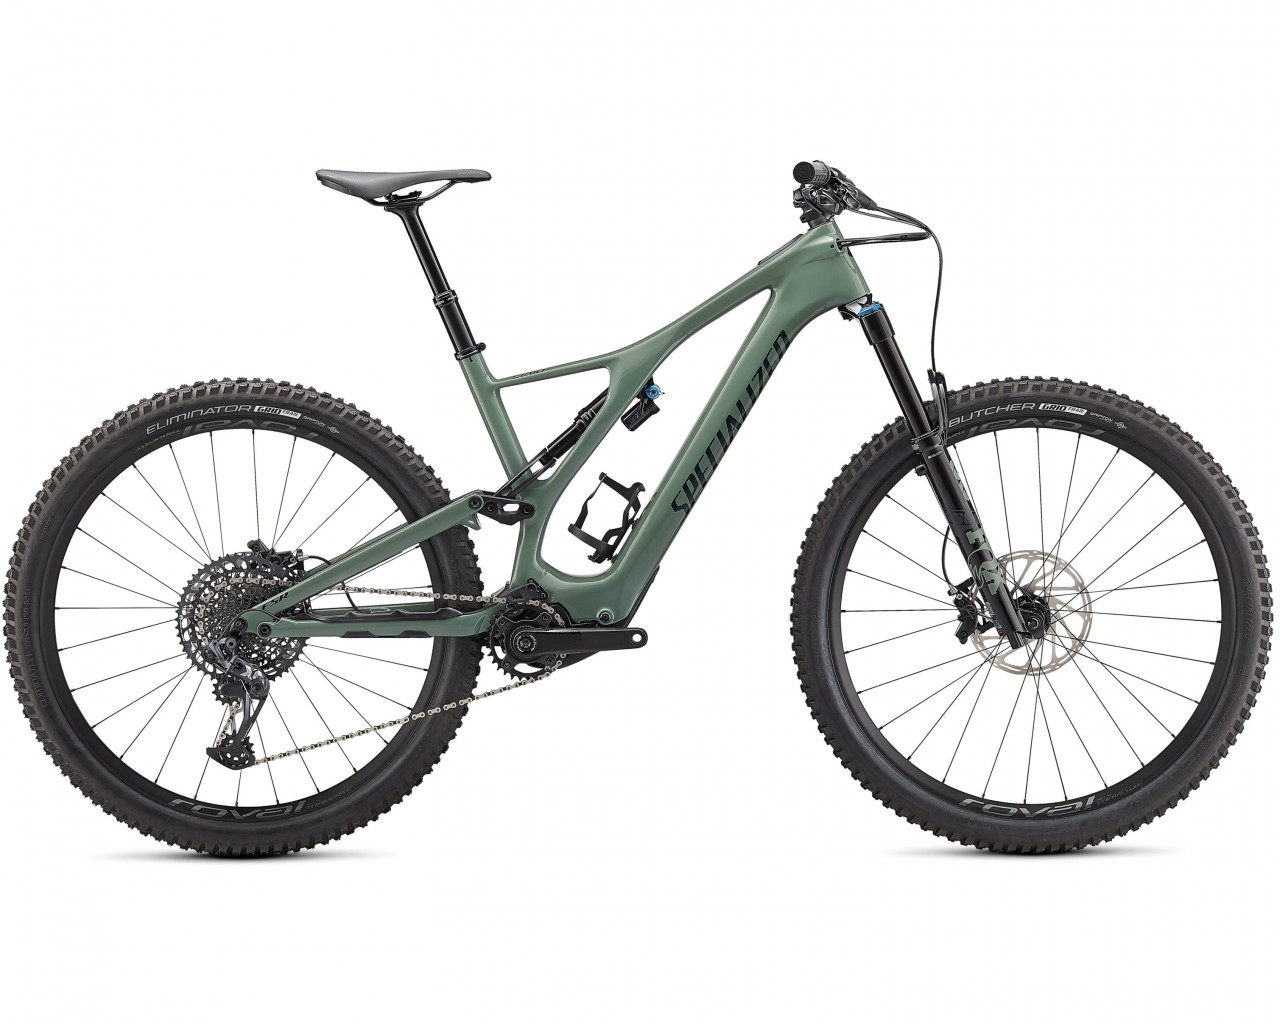 Specialized Levo SL Expert Carbon 29 - Pedelec Carbon Mountain Bike Fullsuspension 2021 | gloss sage-forst green